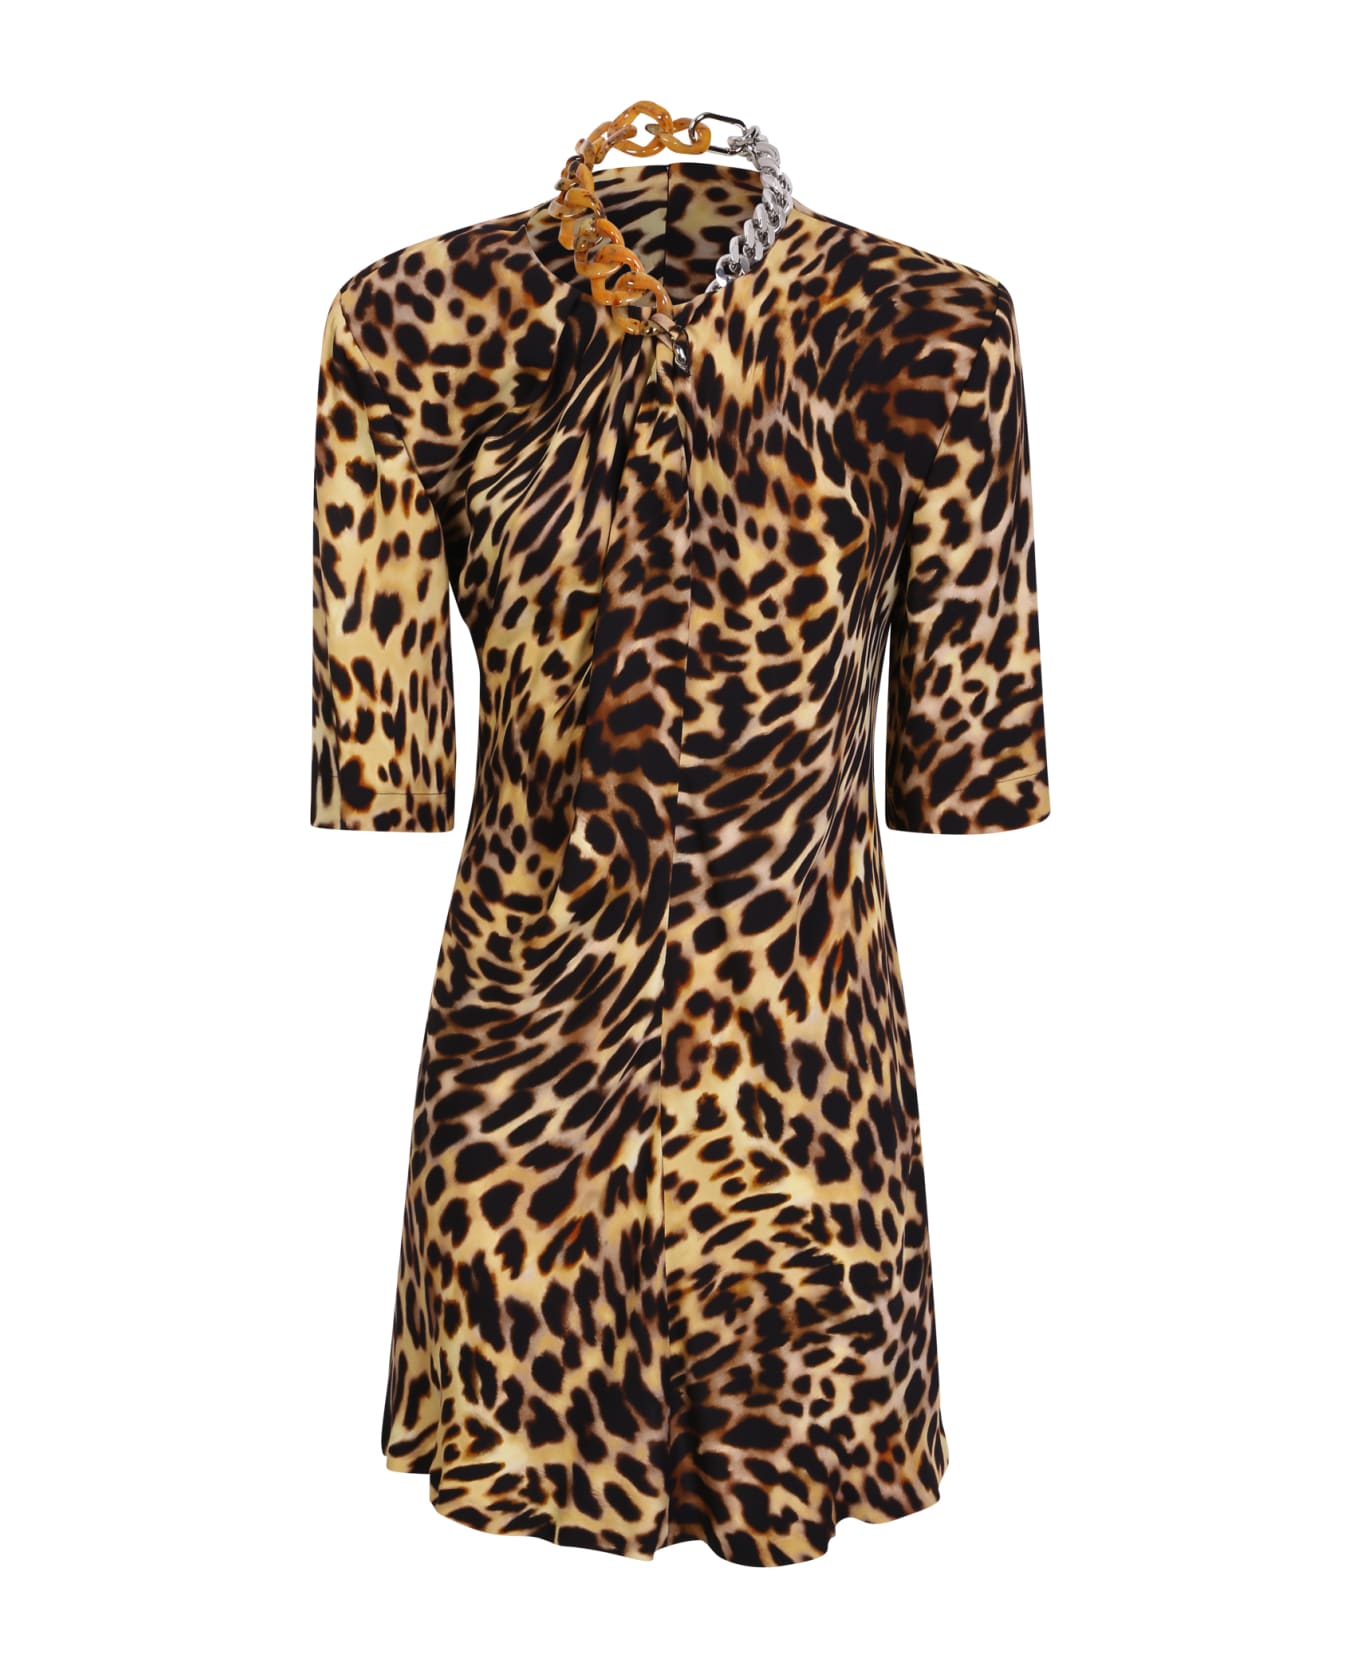 Stella McCartney Leopard Print Dress - Pink